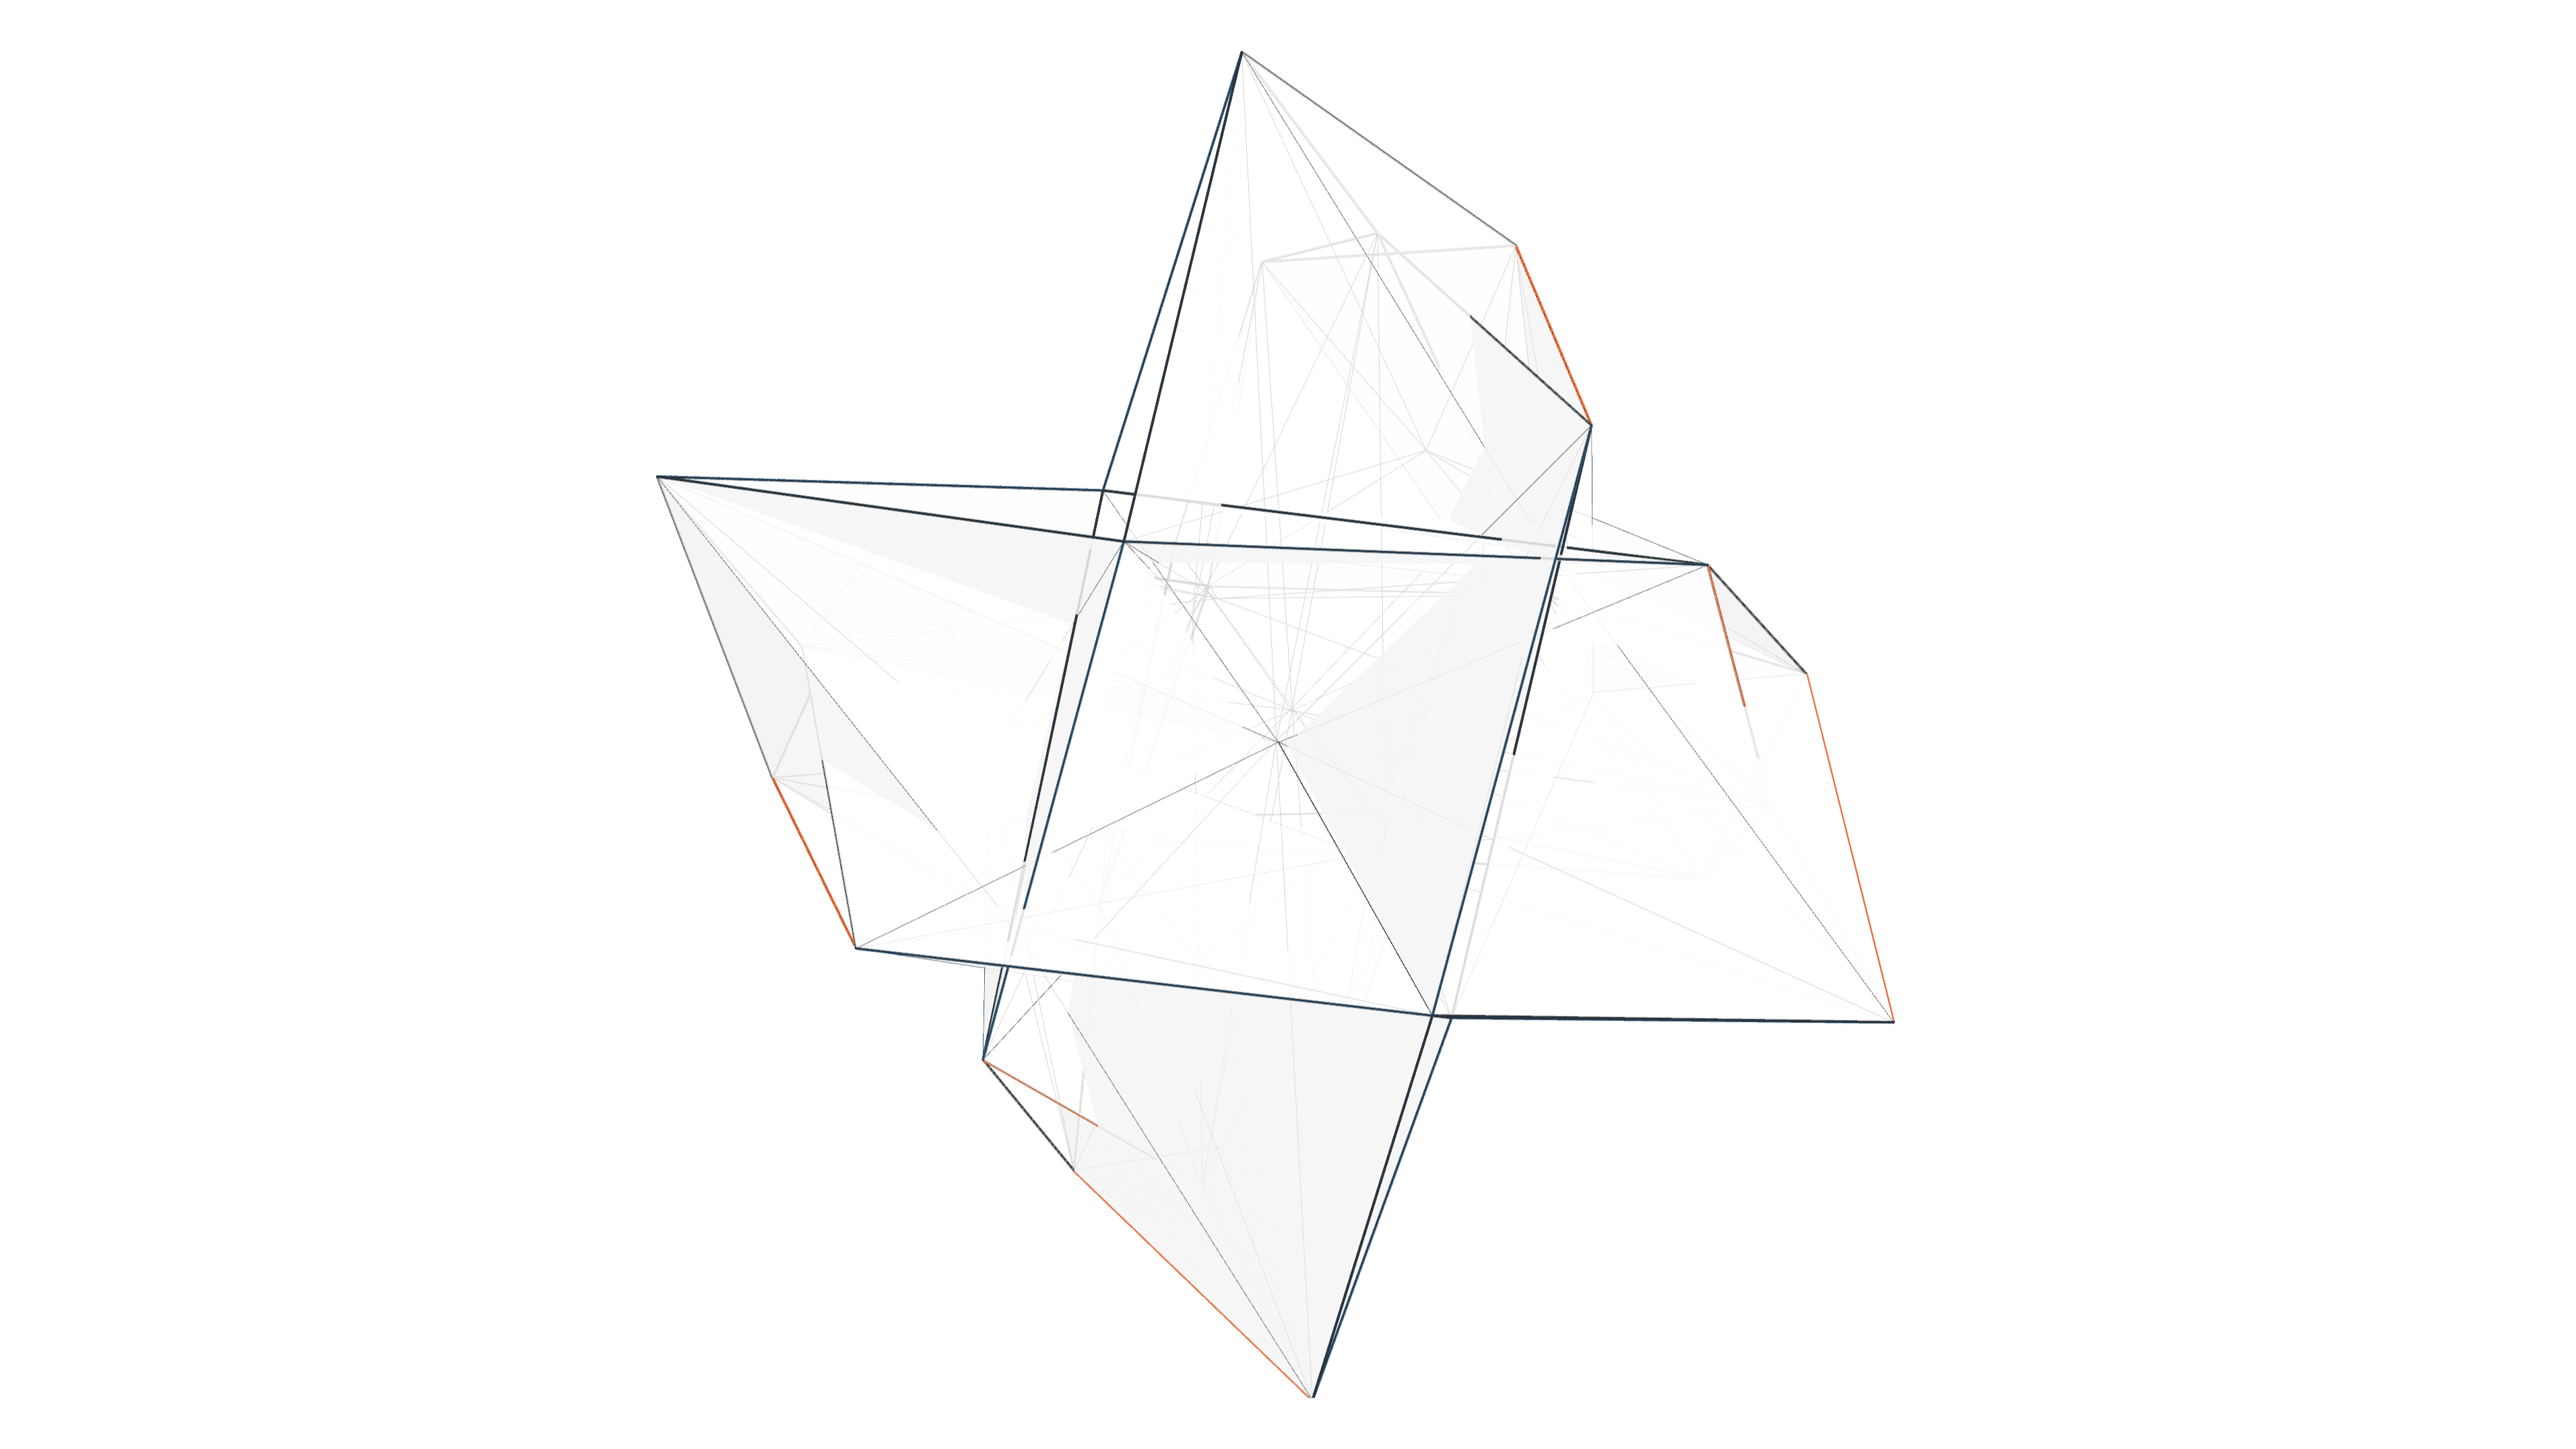 Thumbnail of Octagonal 18432-fold Symmetry Expansion